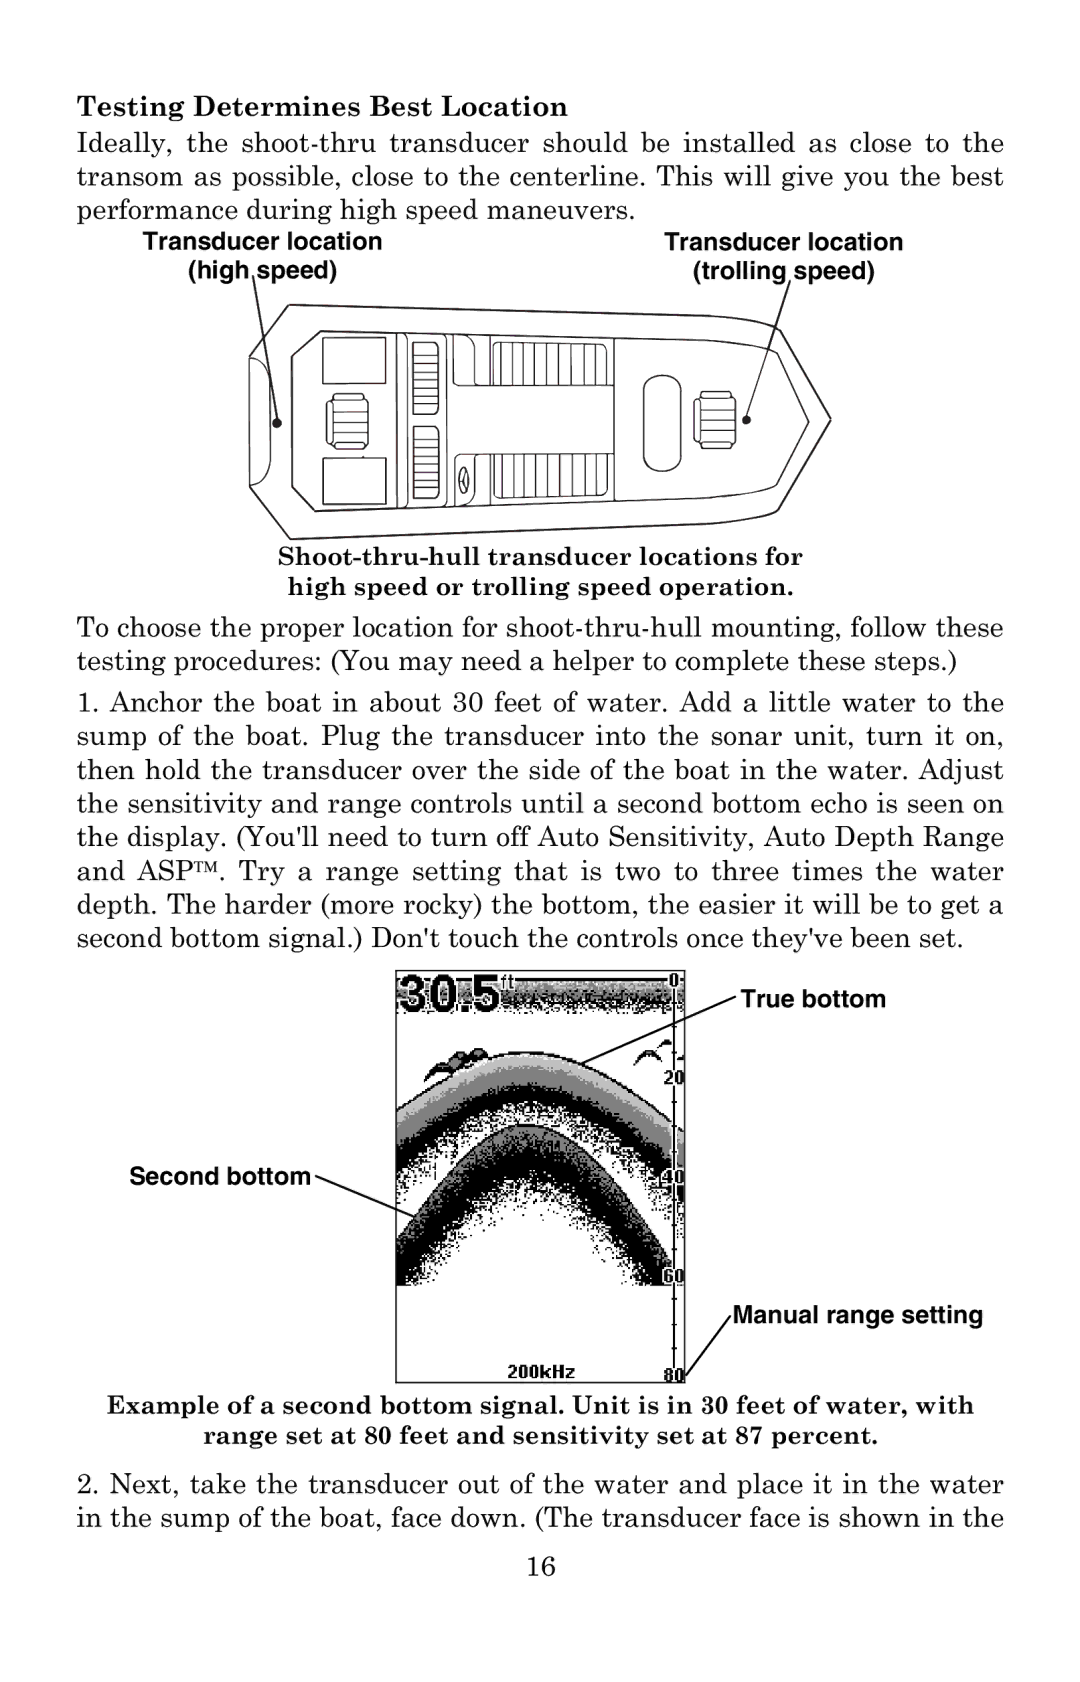 Lowrance electronic X52 Transducer location High speed Trolling speed, True bottom Second bottom Manual range setting 